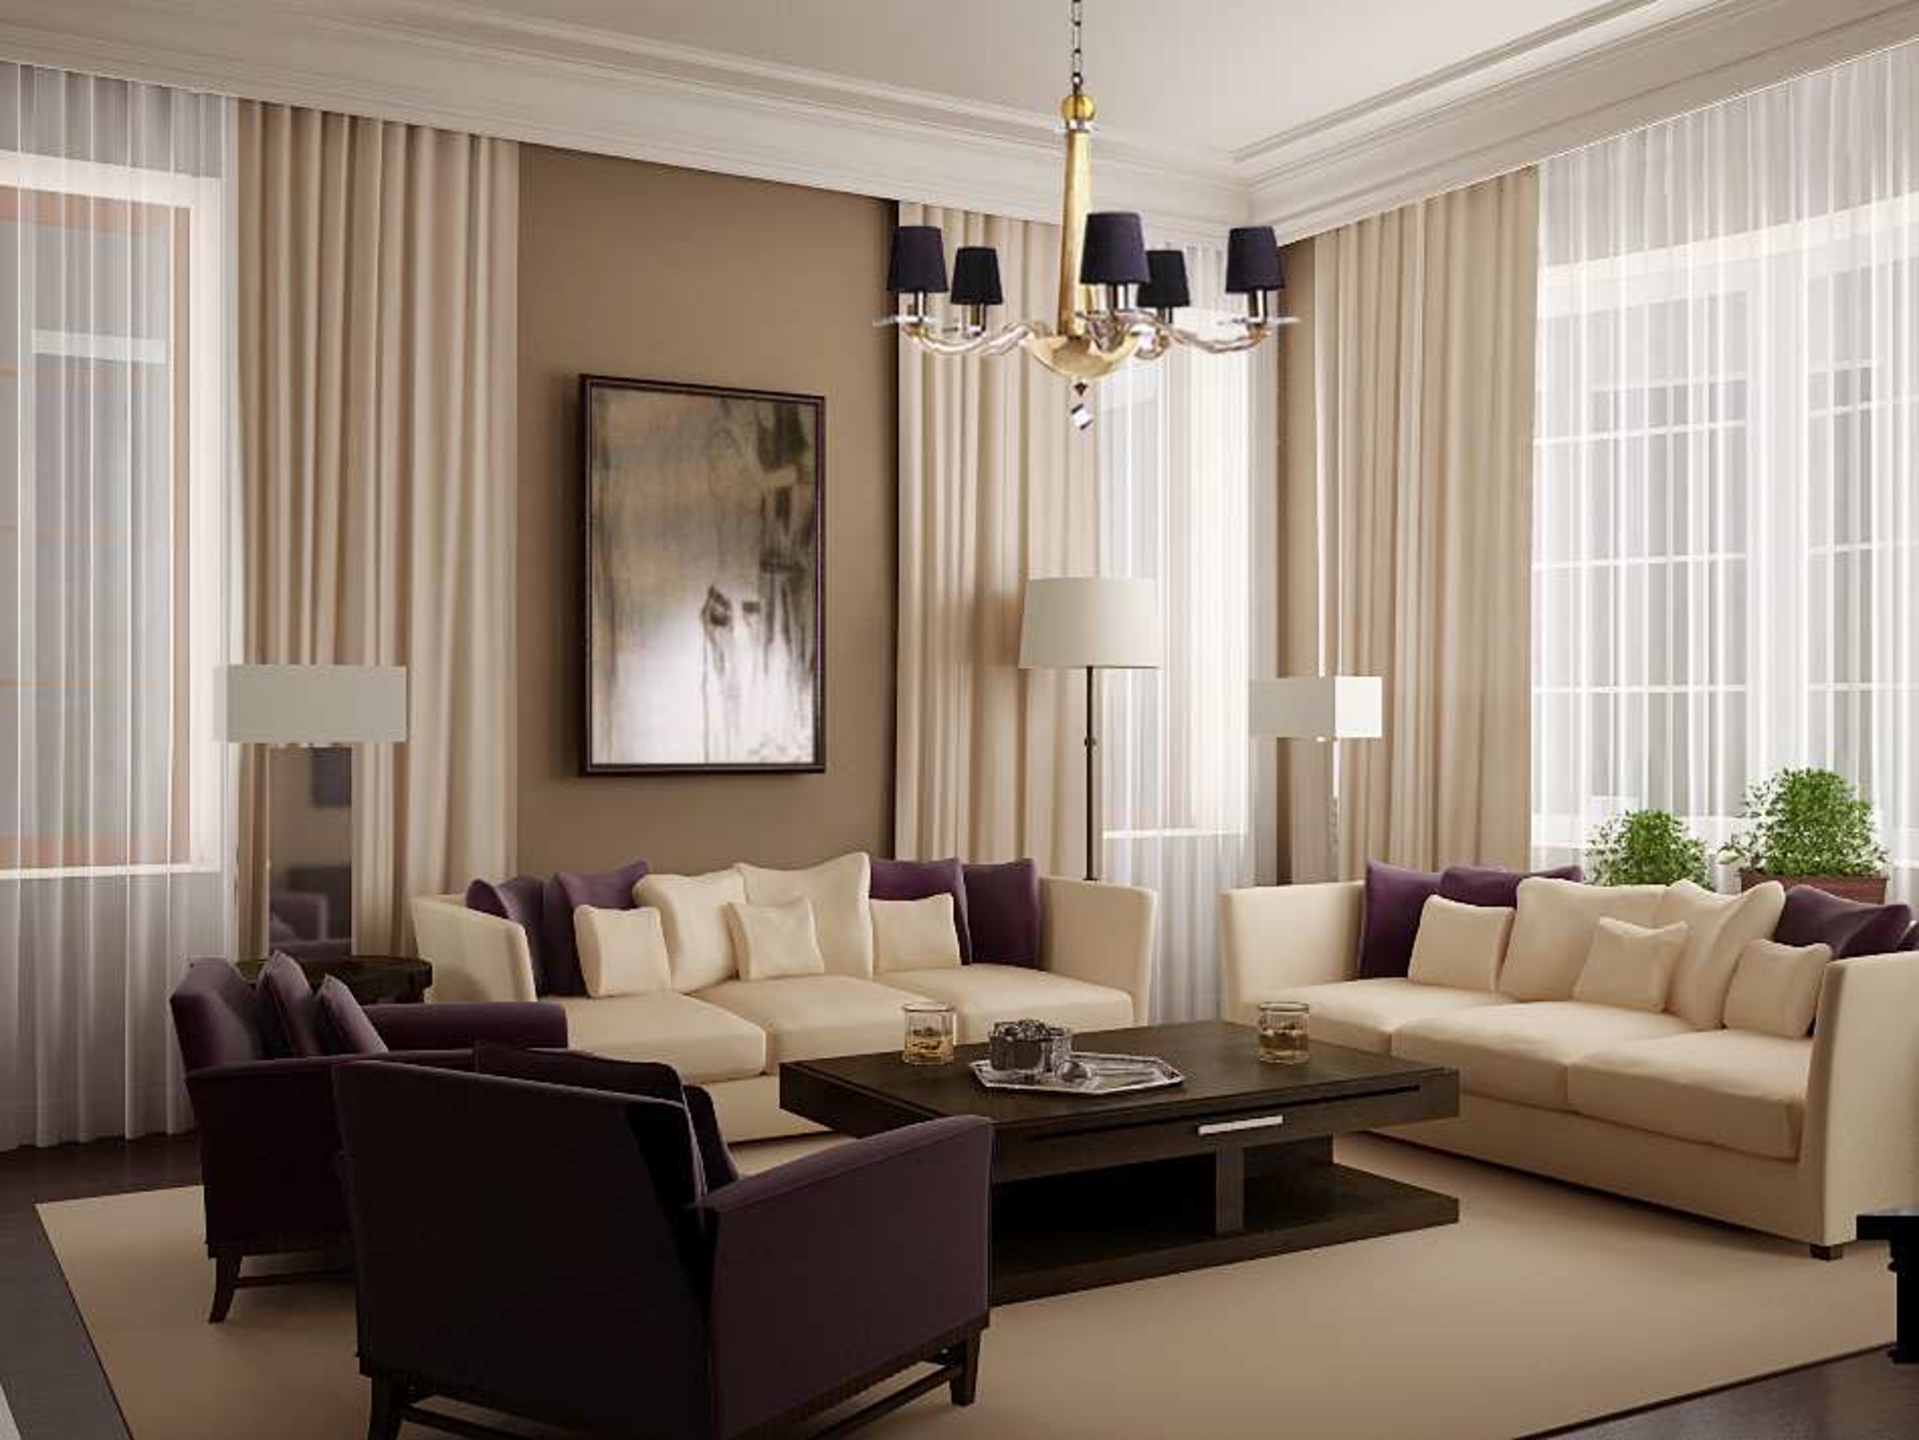 Elegant Living Room Ideas | Fotolip.com Rich image and wallpaper